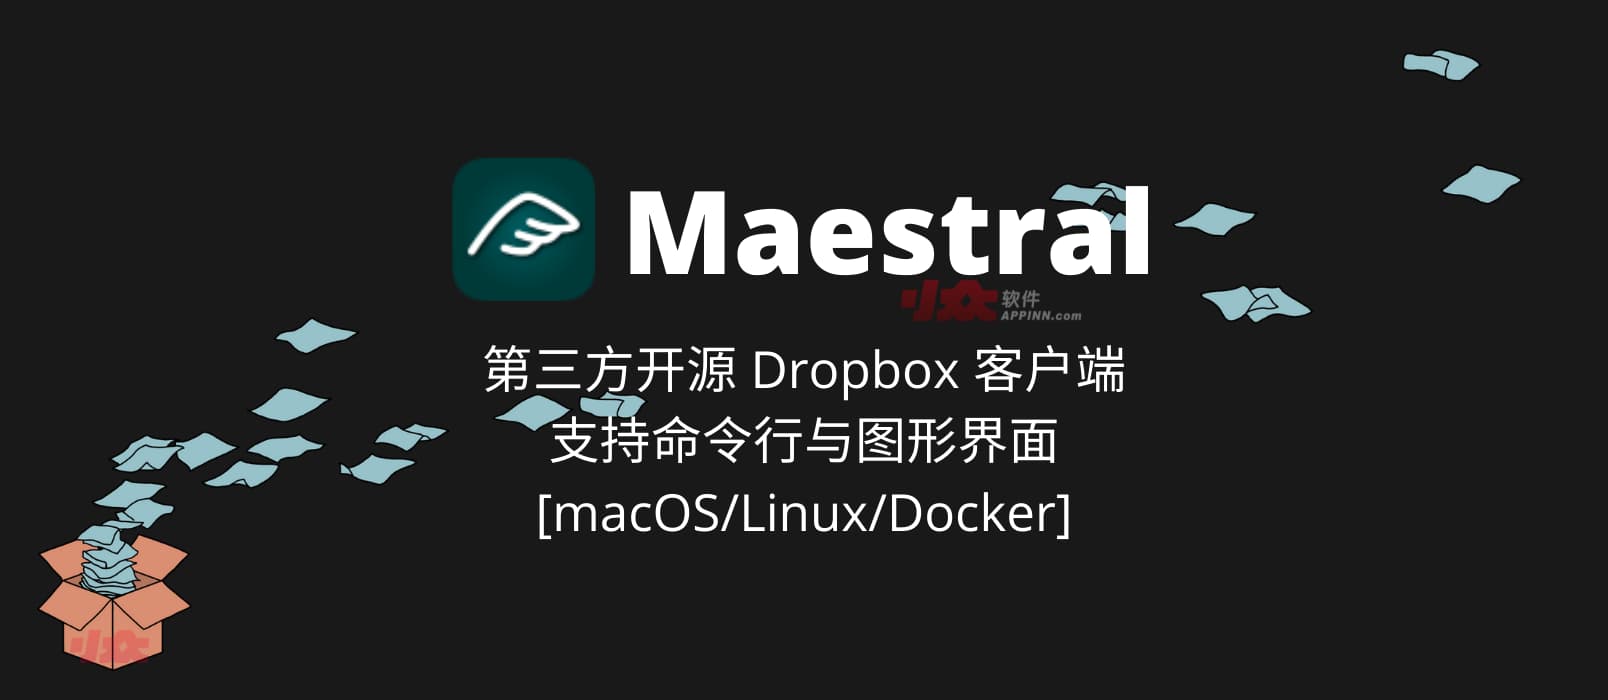 Maestral - 第三方开源 Dropbox 客户端，支持命令行与图形界面[macOS/Linux]